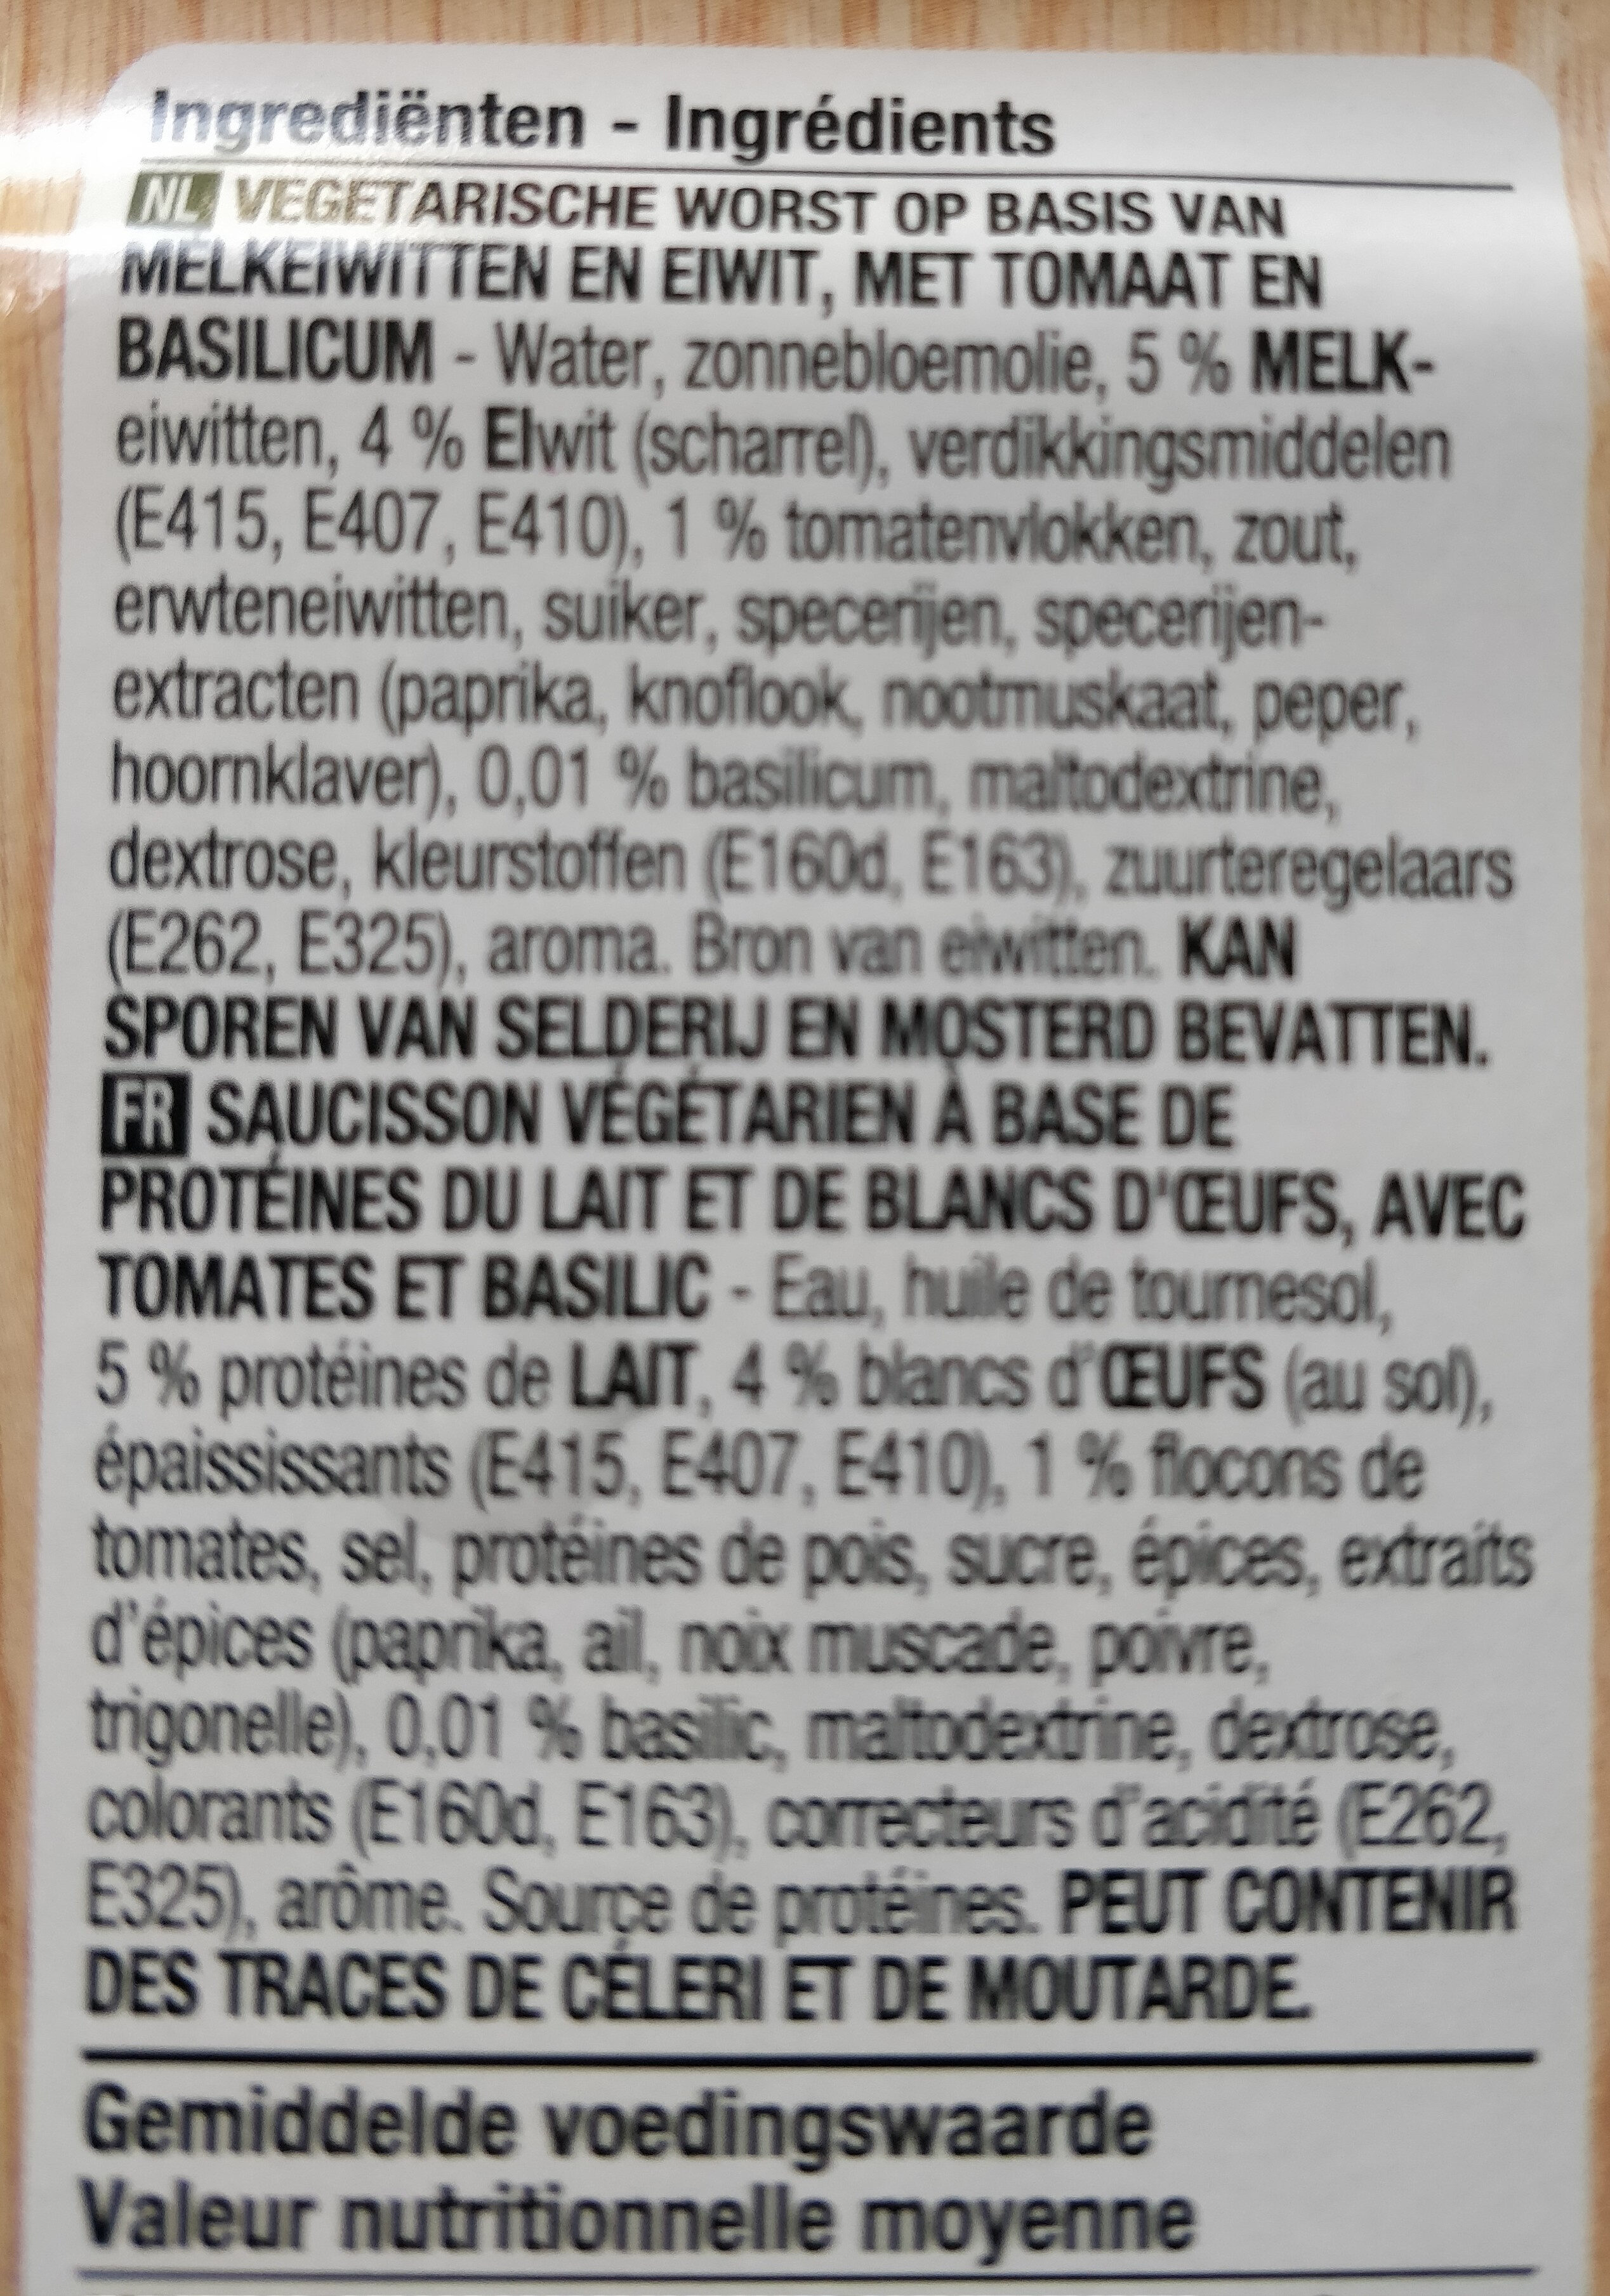 Saucisson végétarien - Ingrediënten